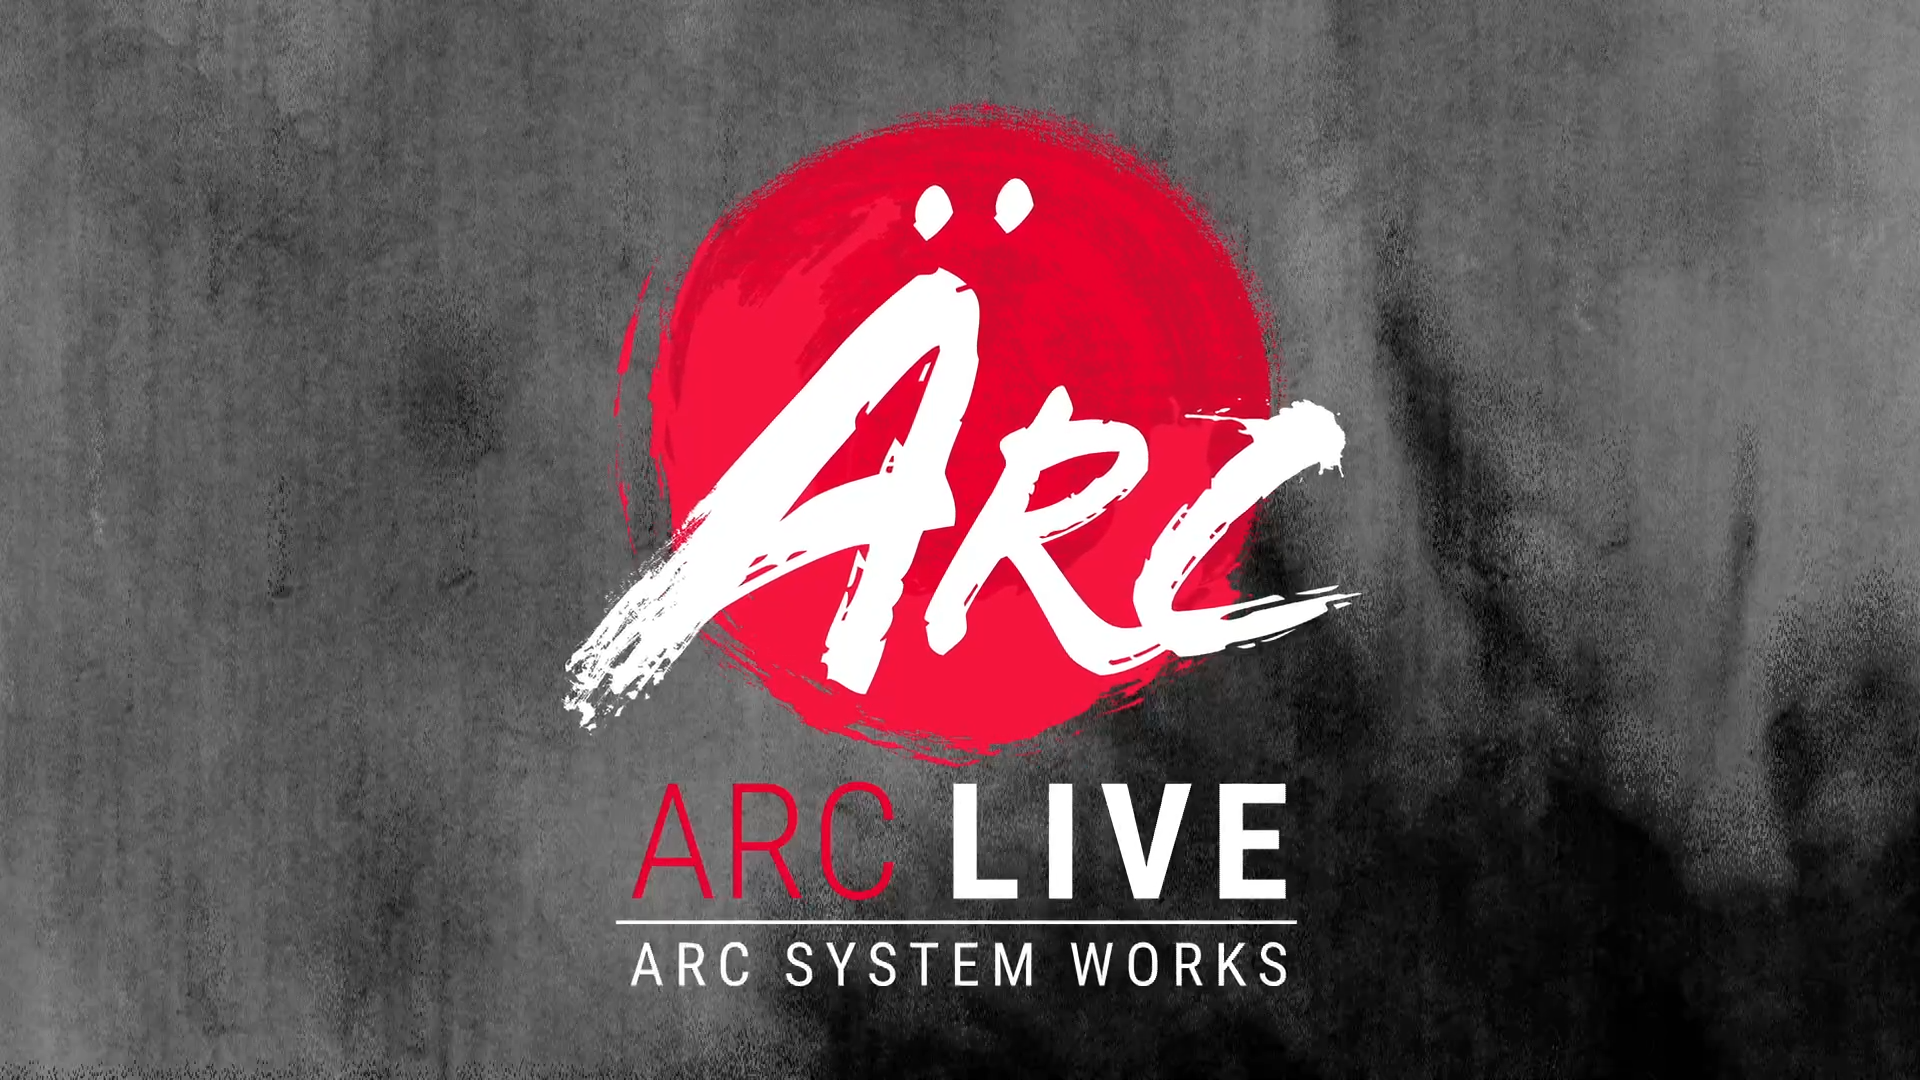 Arc system